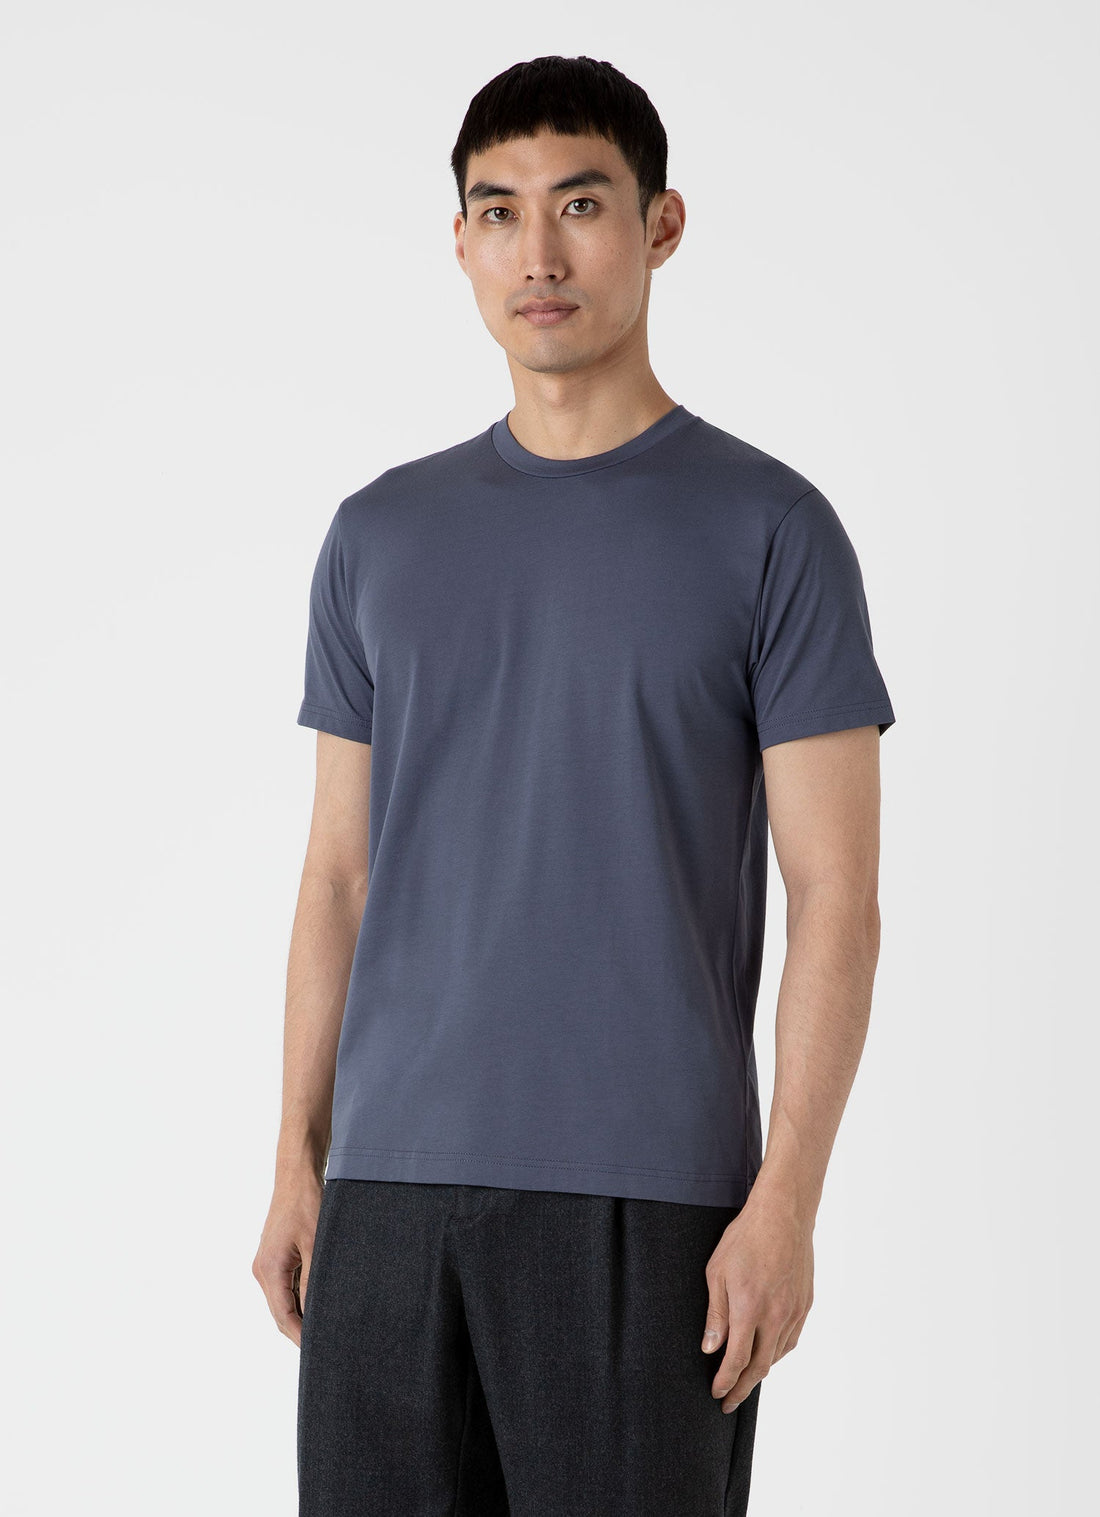 Men's Riviera Midweight T-shirt in Slate Blue